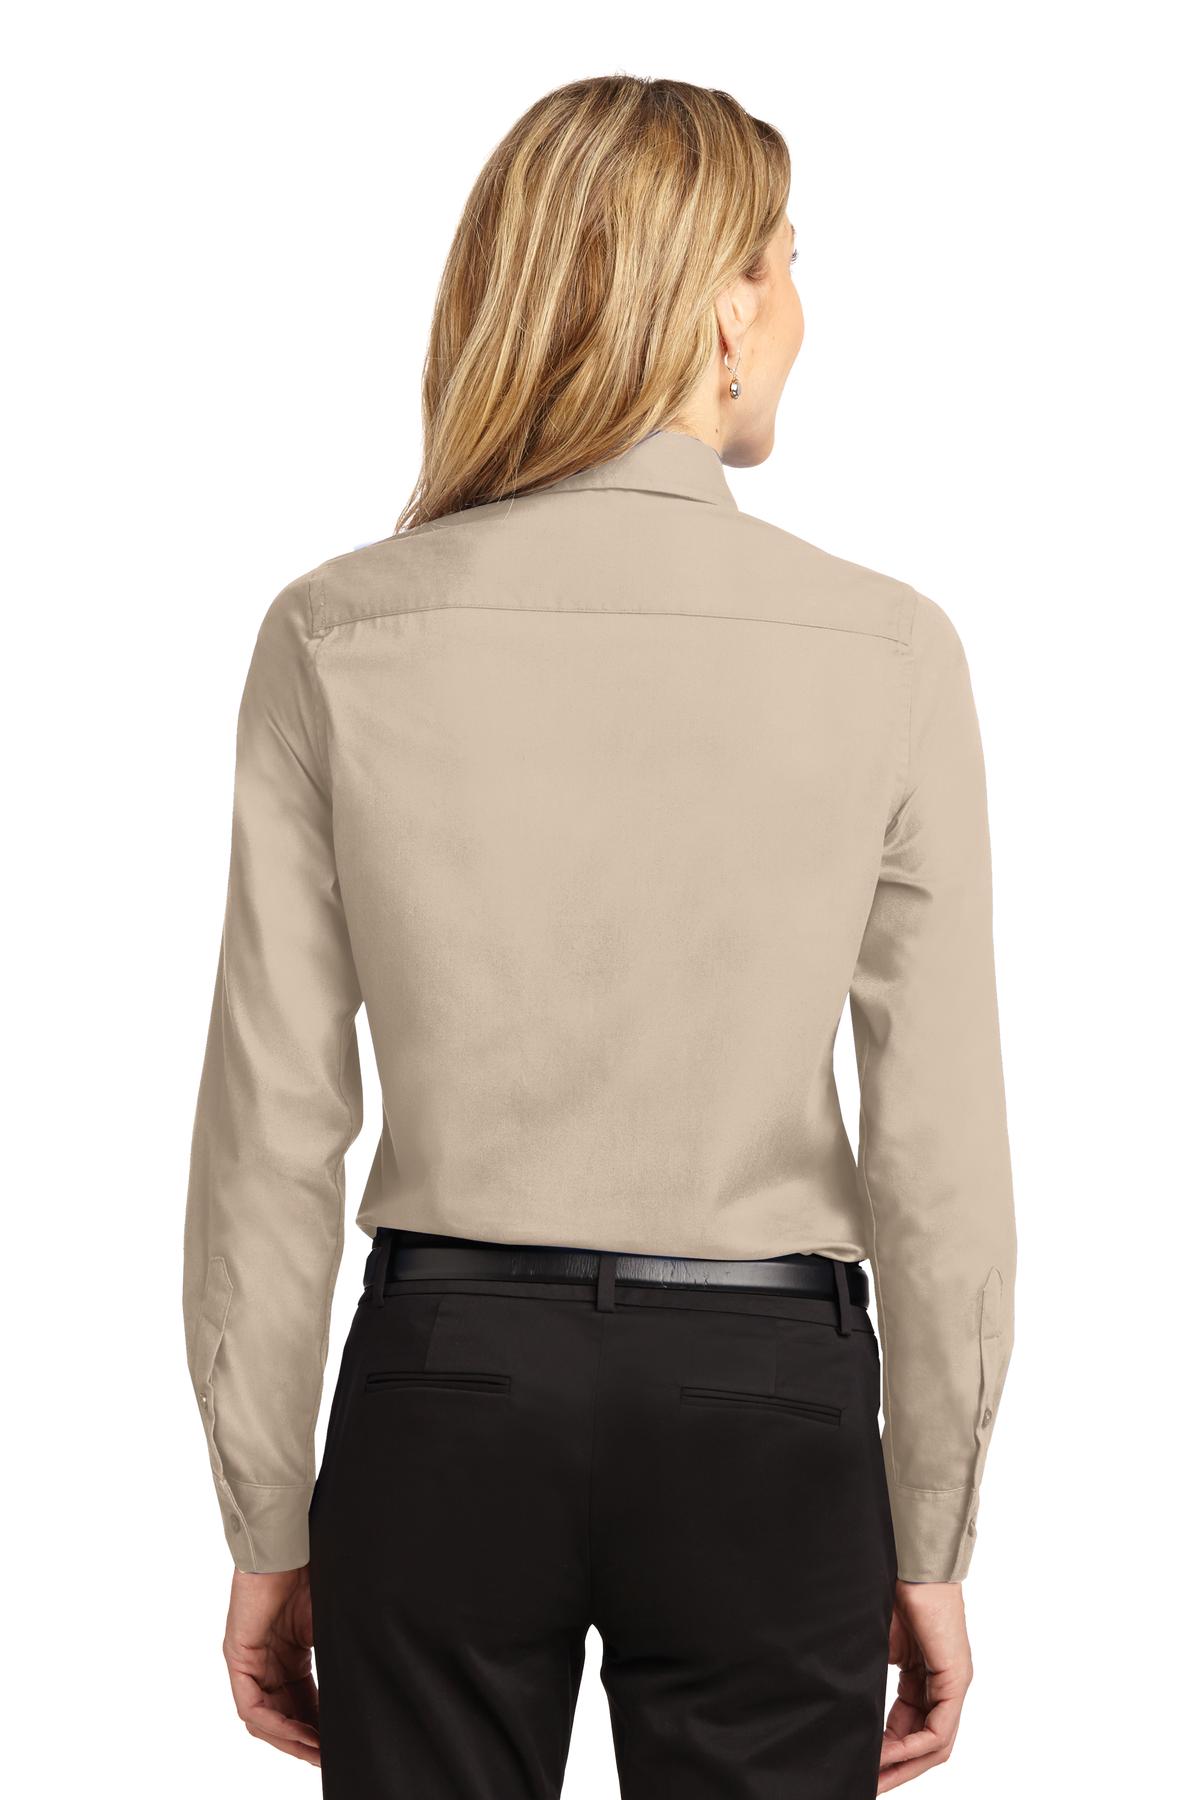 Port Authority Ladies Long Sleeve Easy Care Shirt-M (Stone) - image 2 of 6